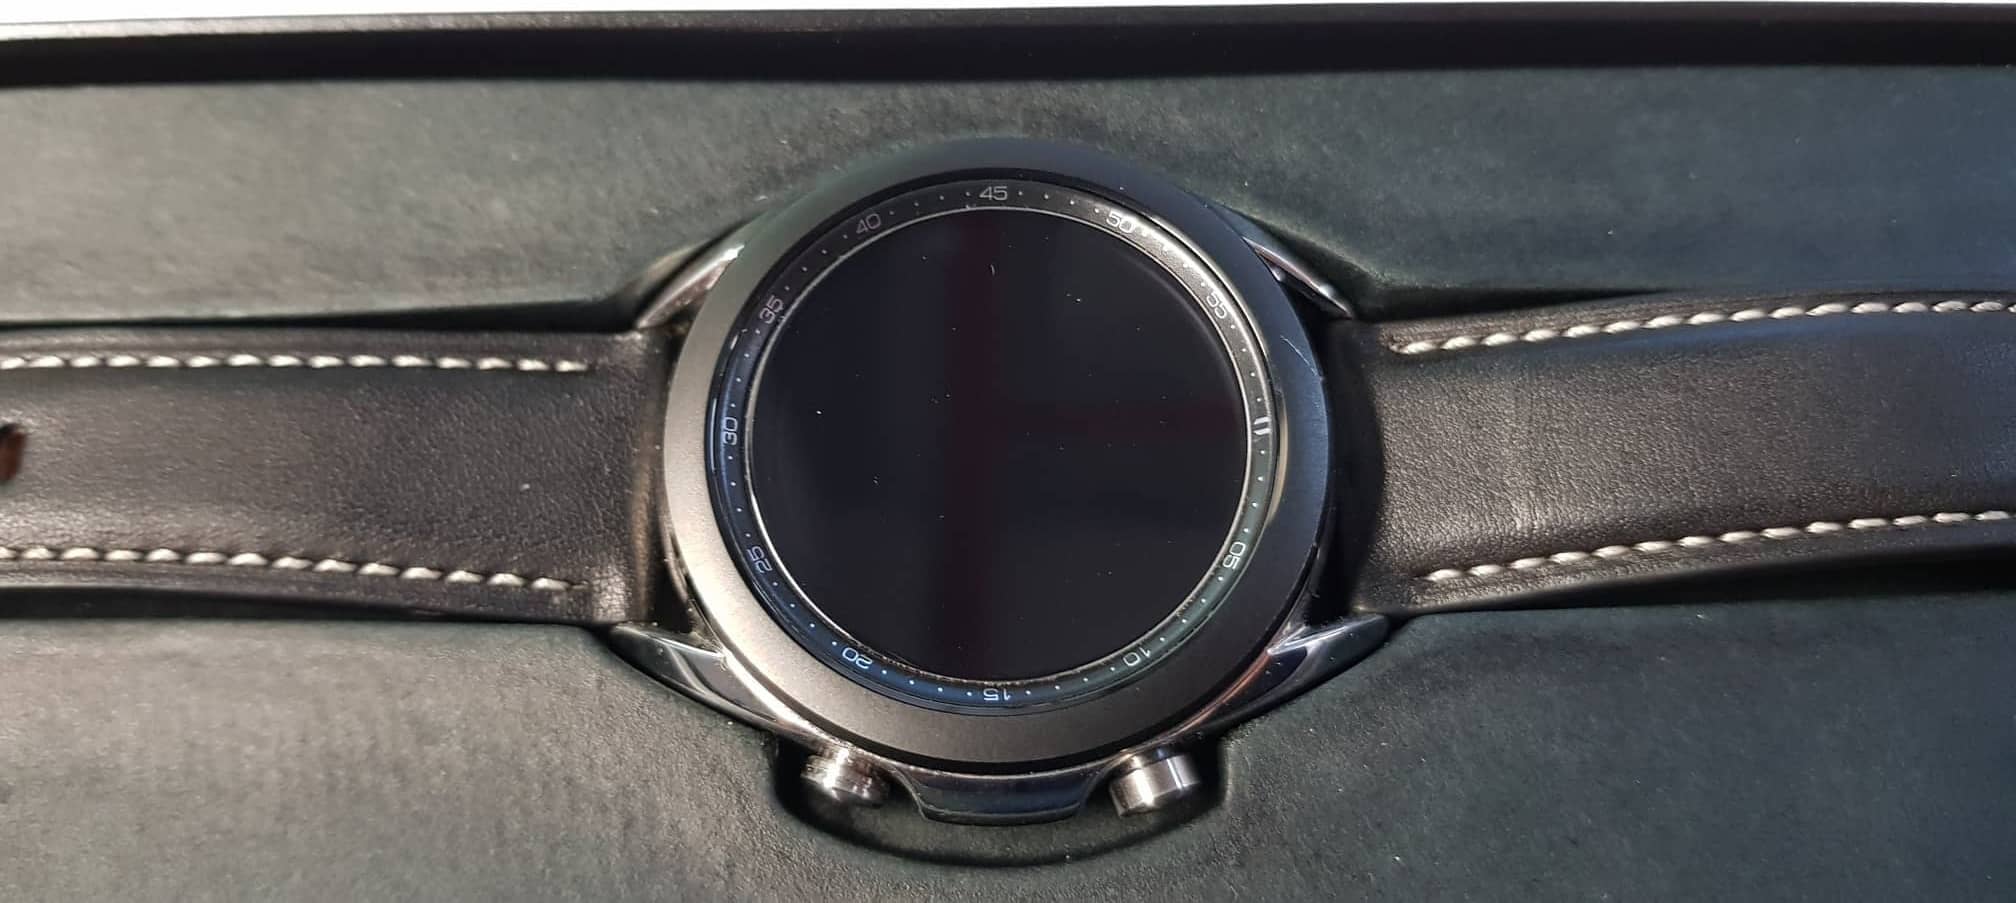 samsung sm-r850nzsaeub outlet - galaxy watch 3 - smartwatch orologio cardio gps bluetooth cinturino in pelle colore silver - sm-r850nzsaeub